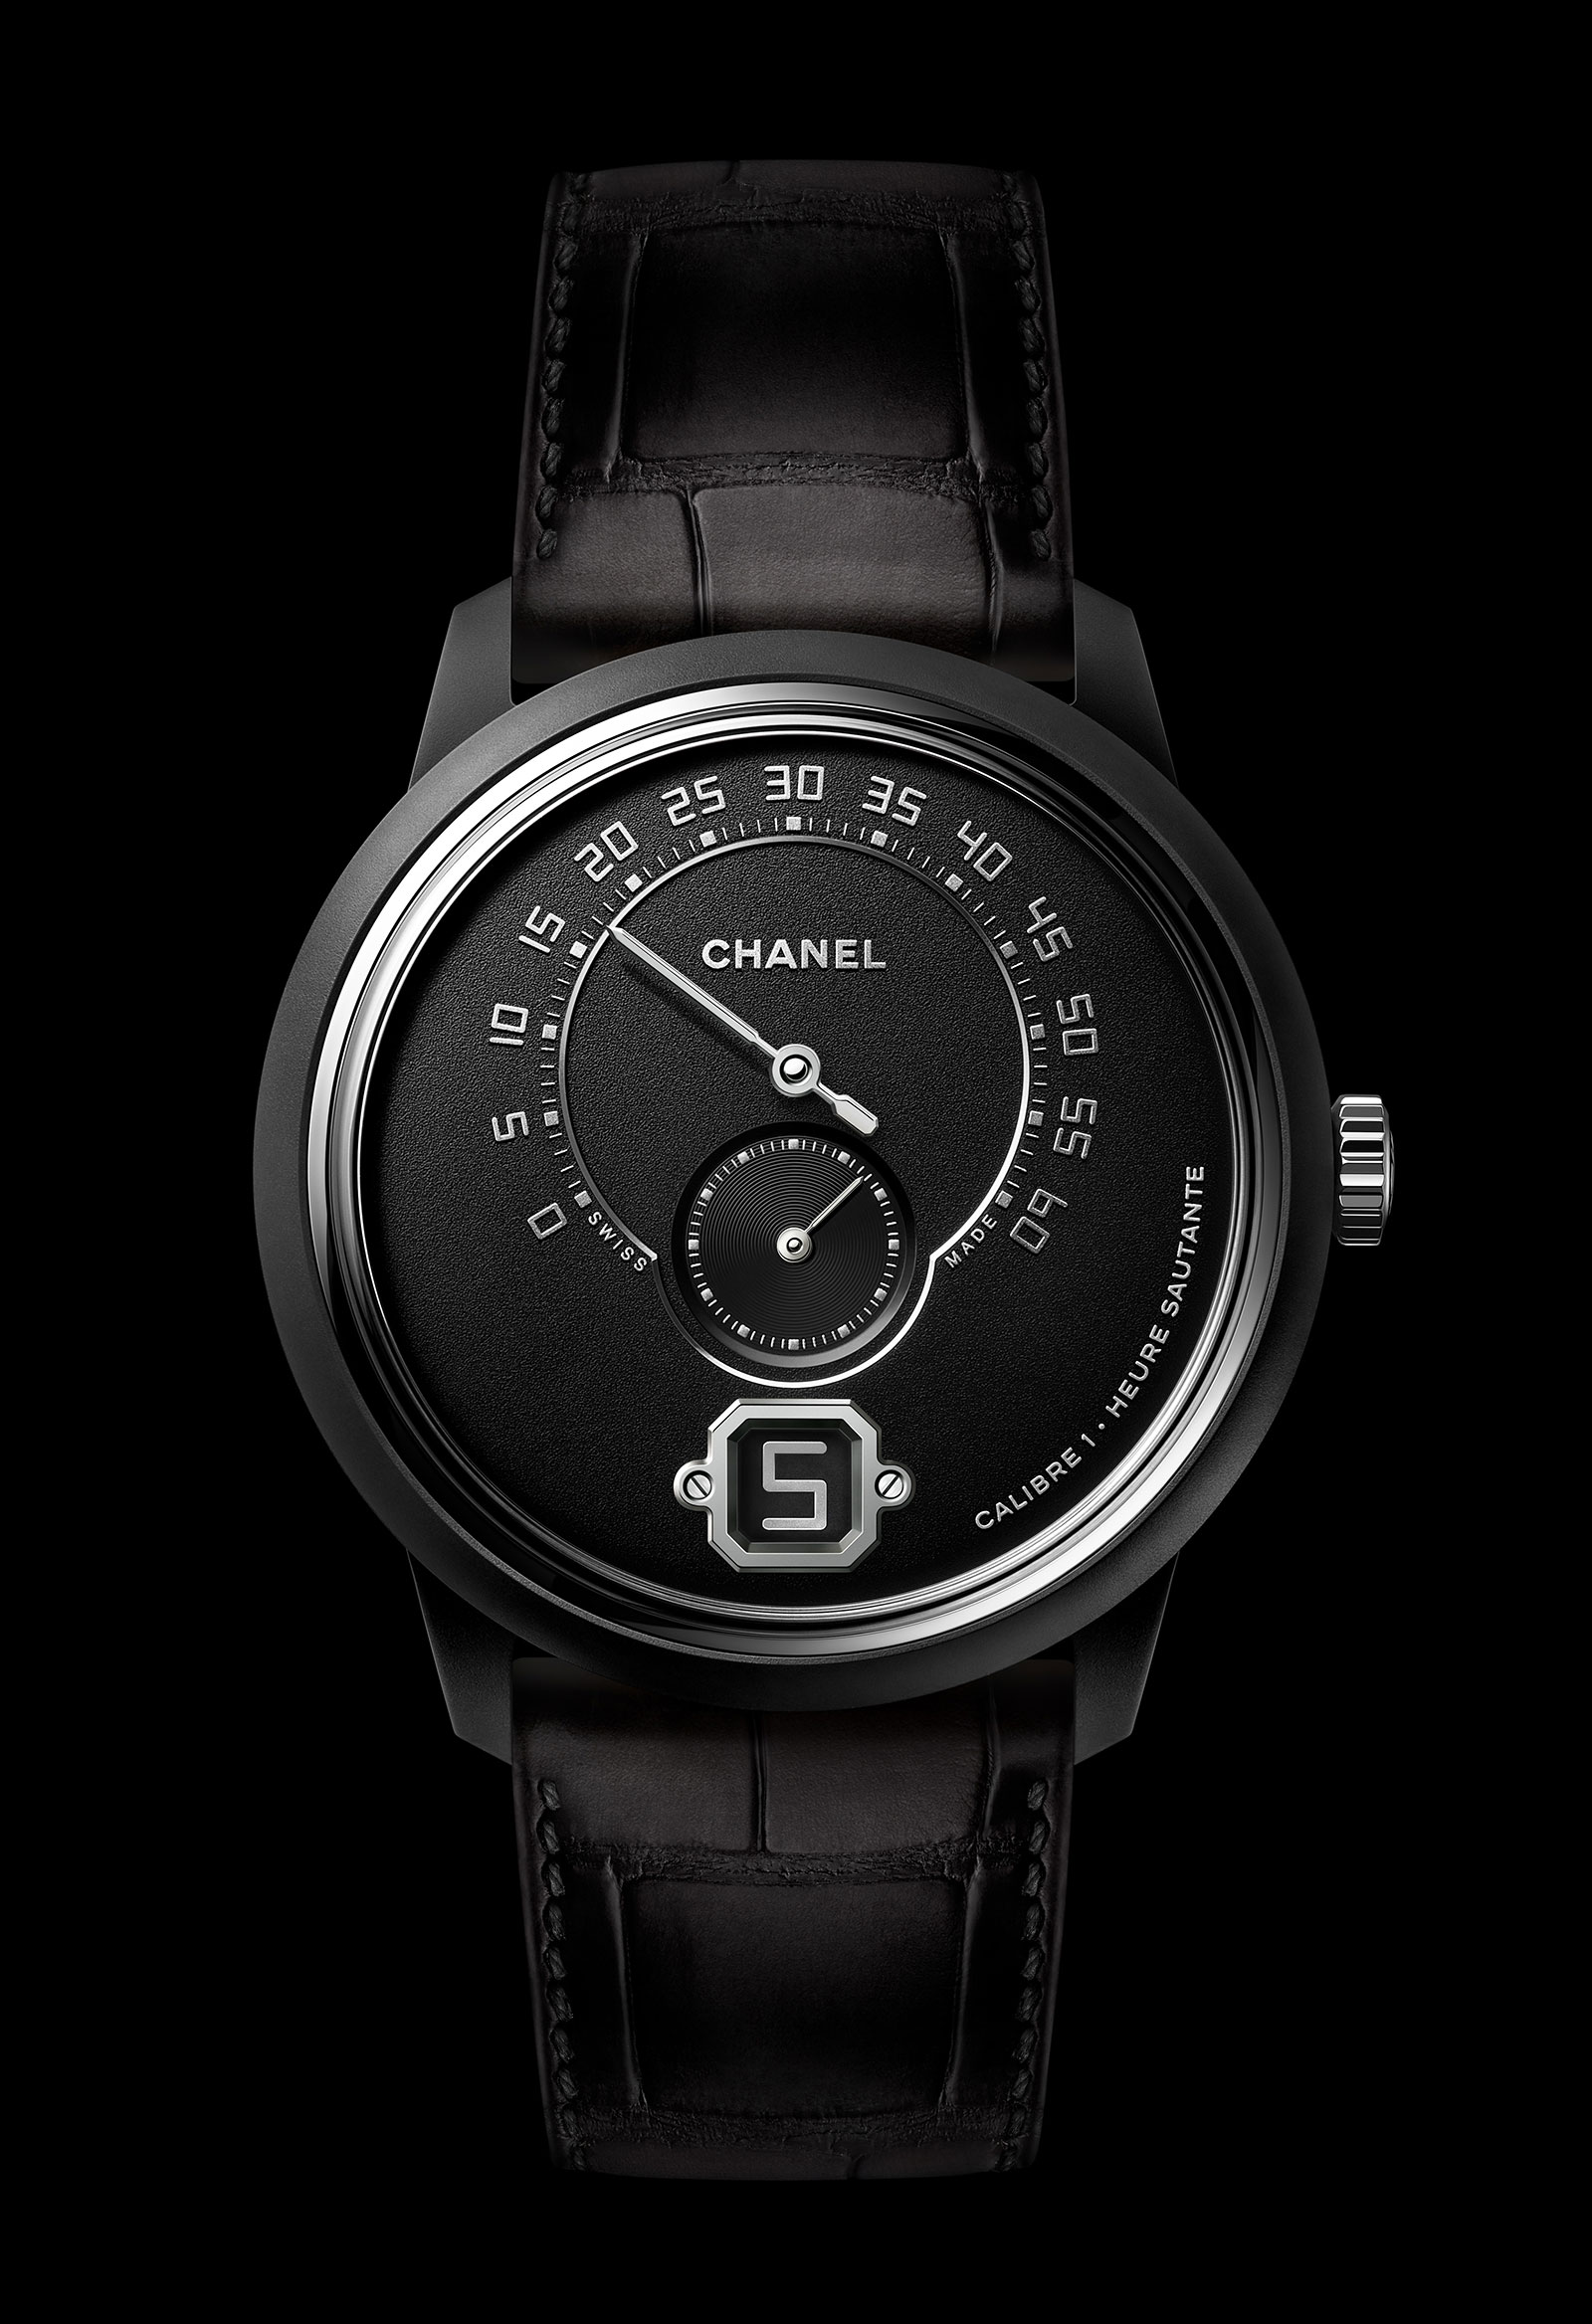 Chanel Introduces the Monsieur Édition Noire in Black Ceramic